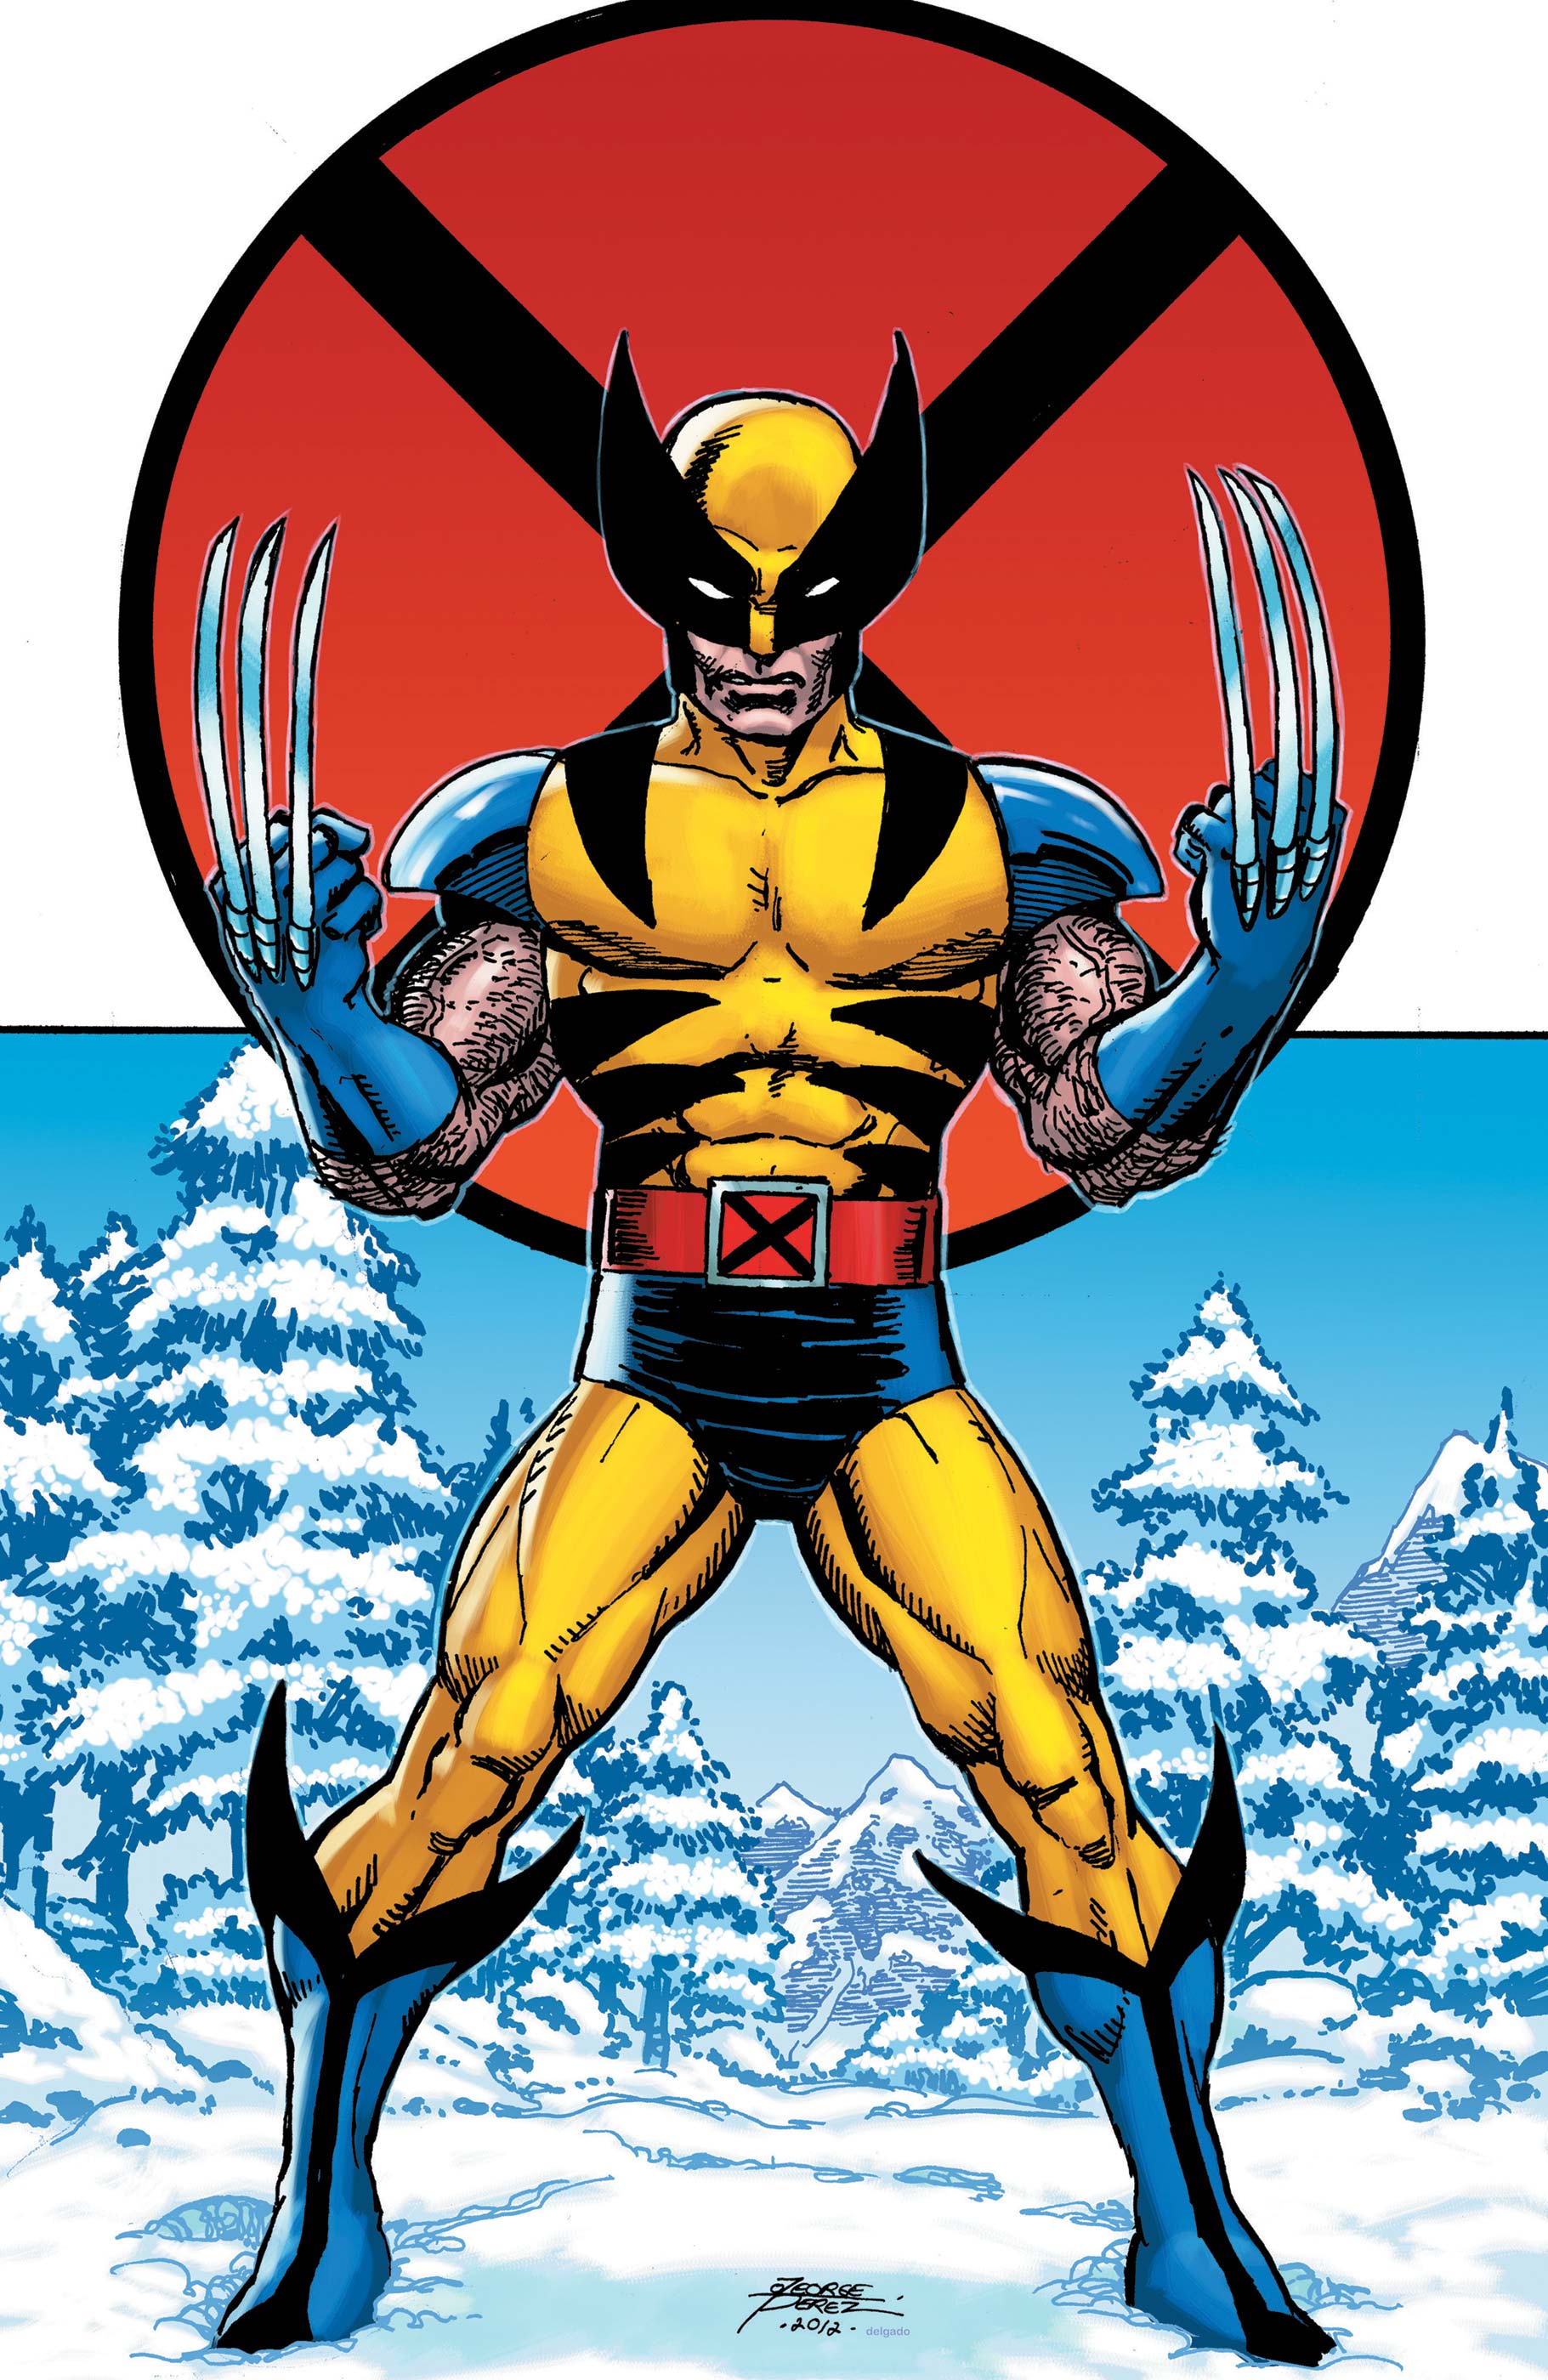 Wolverine (2020) #36 (Variant)